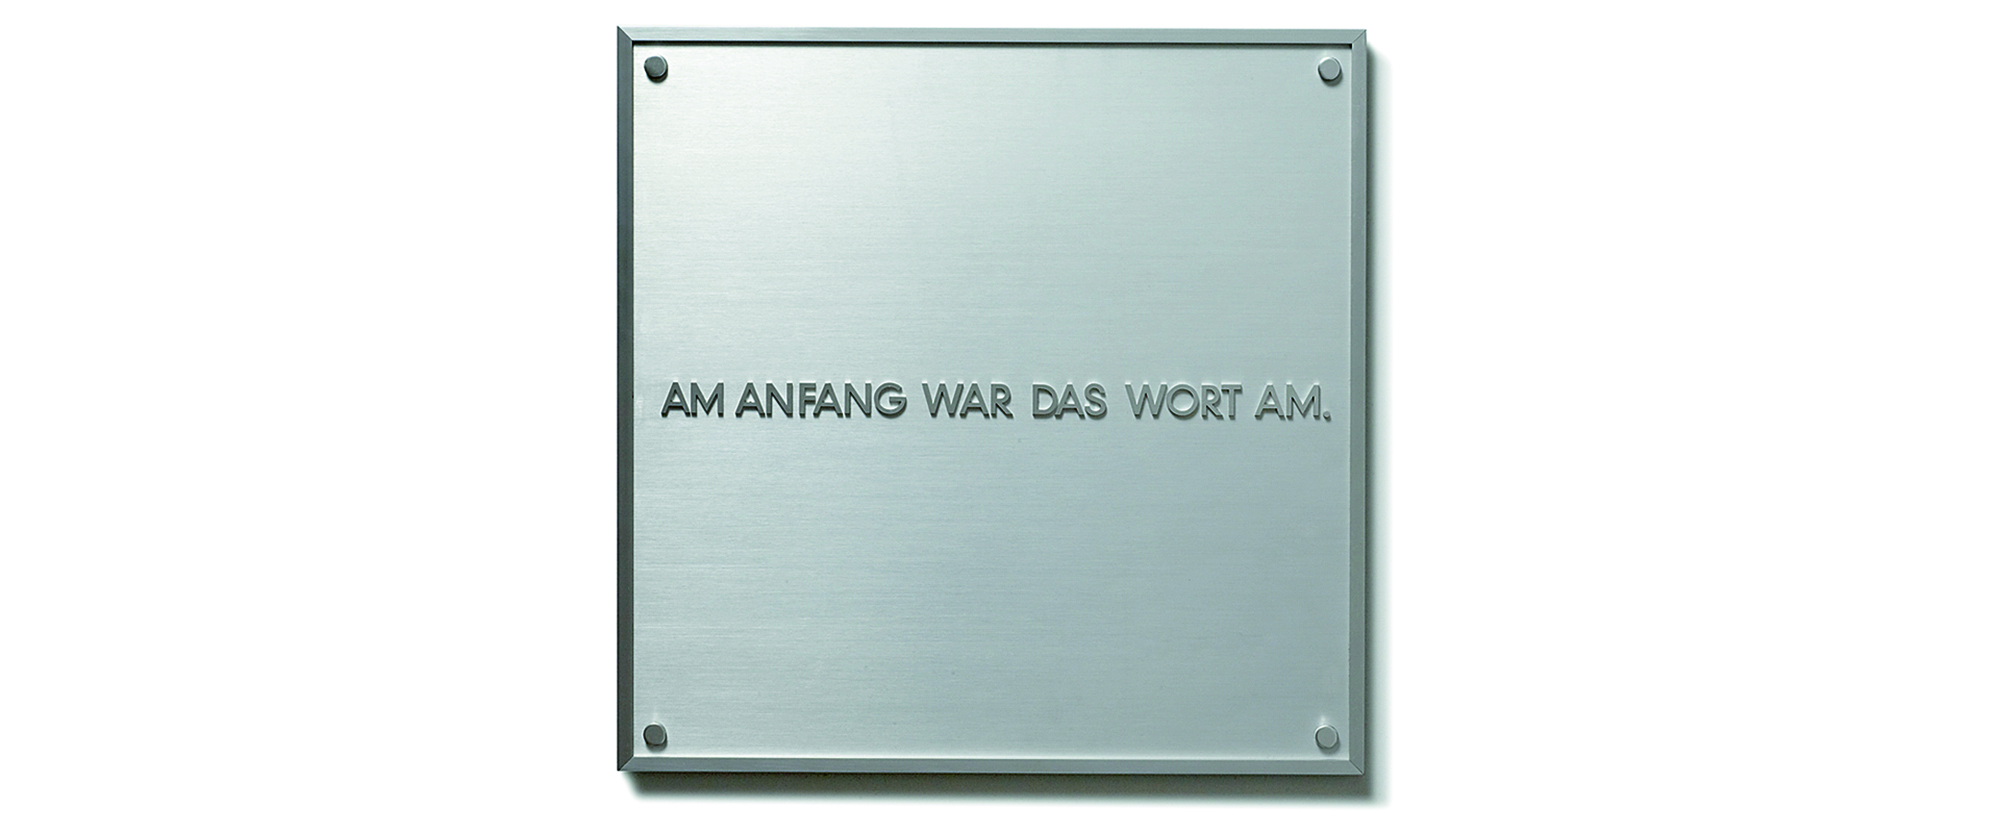 AM ANFANG WAR DAS WORT AM. - 1962/1970, Eloxiertes Aluminium, Auflage 25 Ex., 50 x 50 x 1 cm